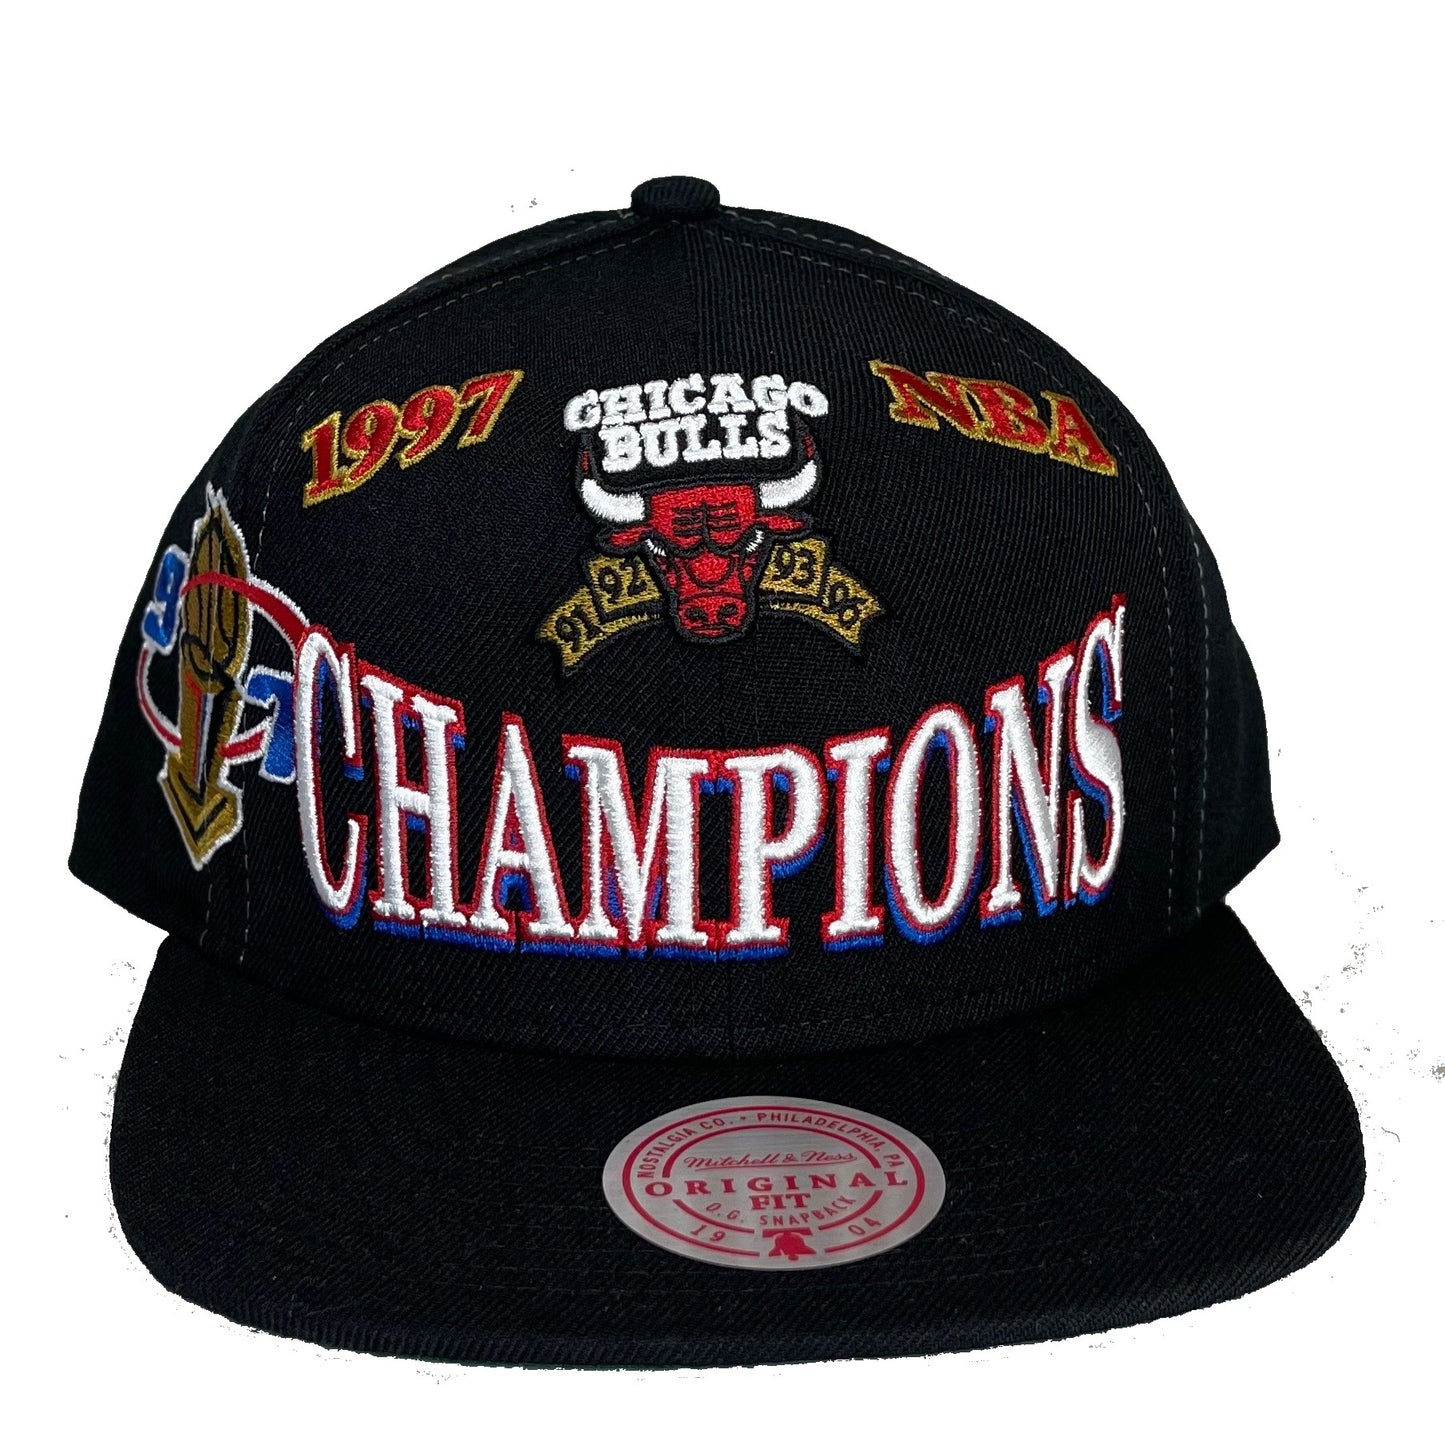 Chicago Bulls Champion 1997 (Black) Snapback